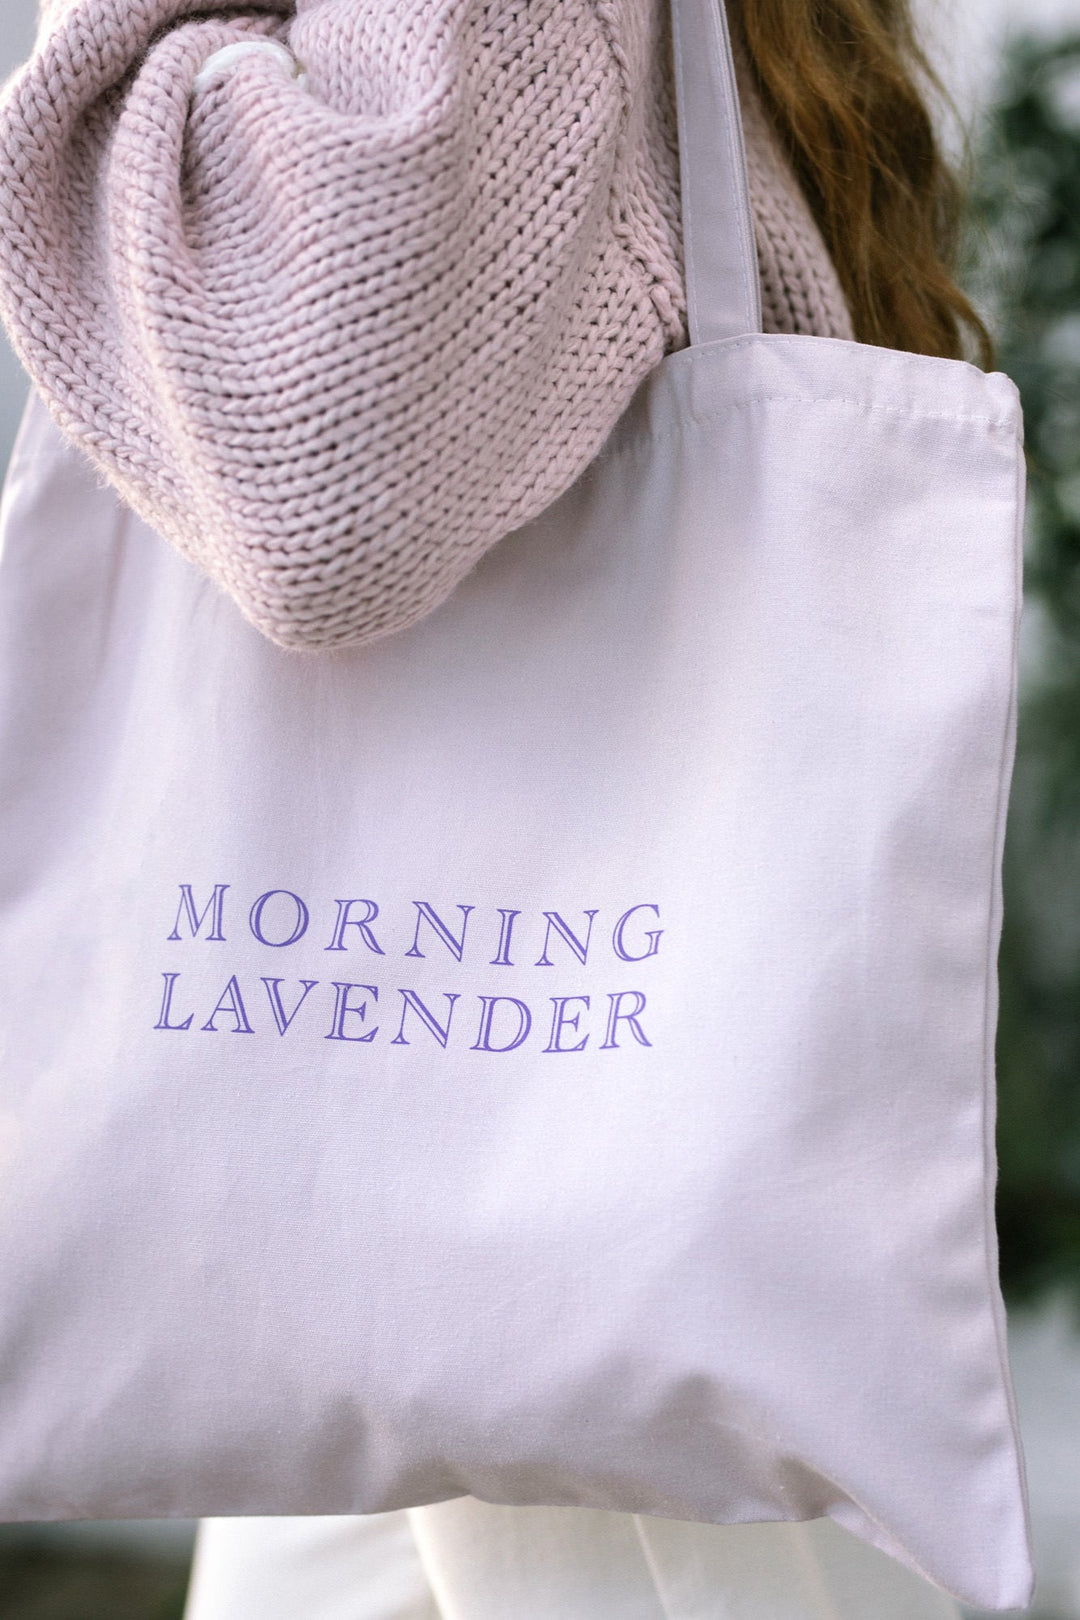 Morning Lavender Tote - Hello Beau-tea-ful